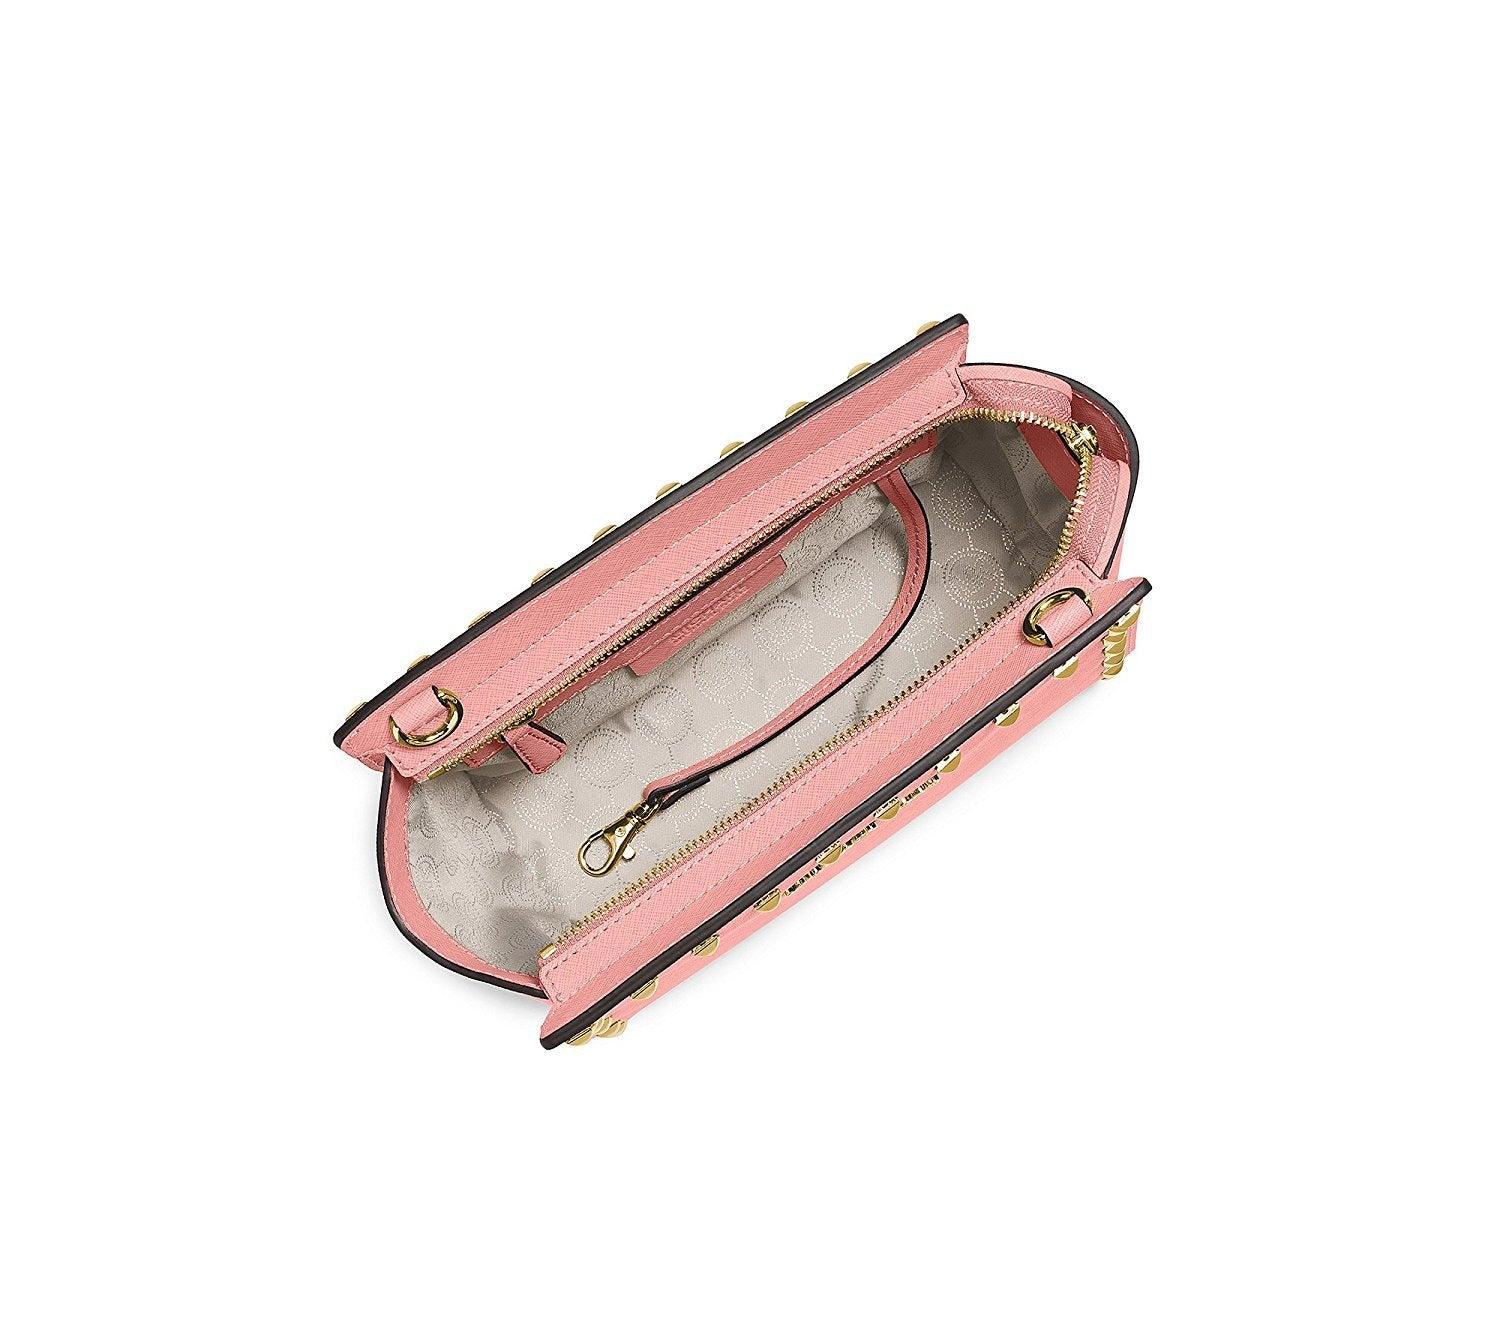 NWT Michael Kors Selma Studded Medium Leather Crossbody in Pale Pink $248